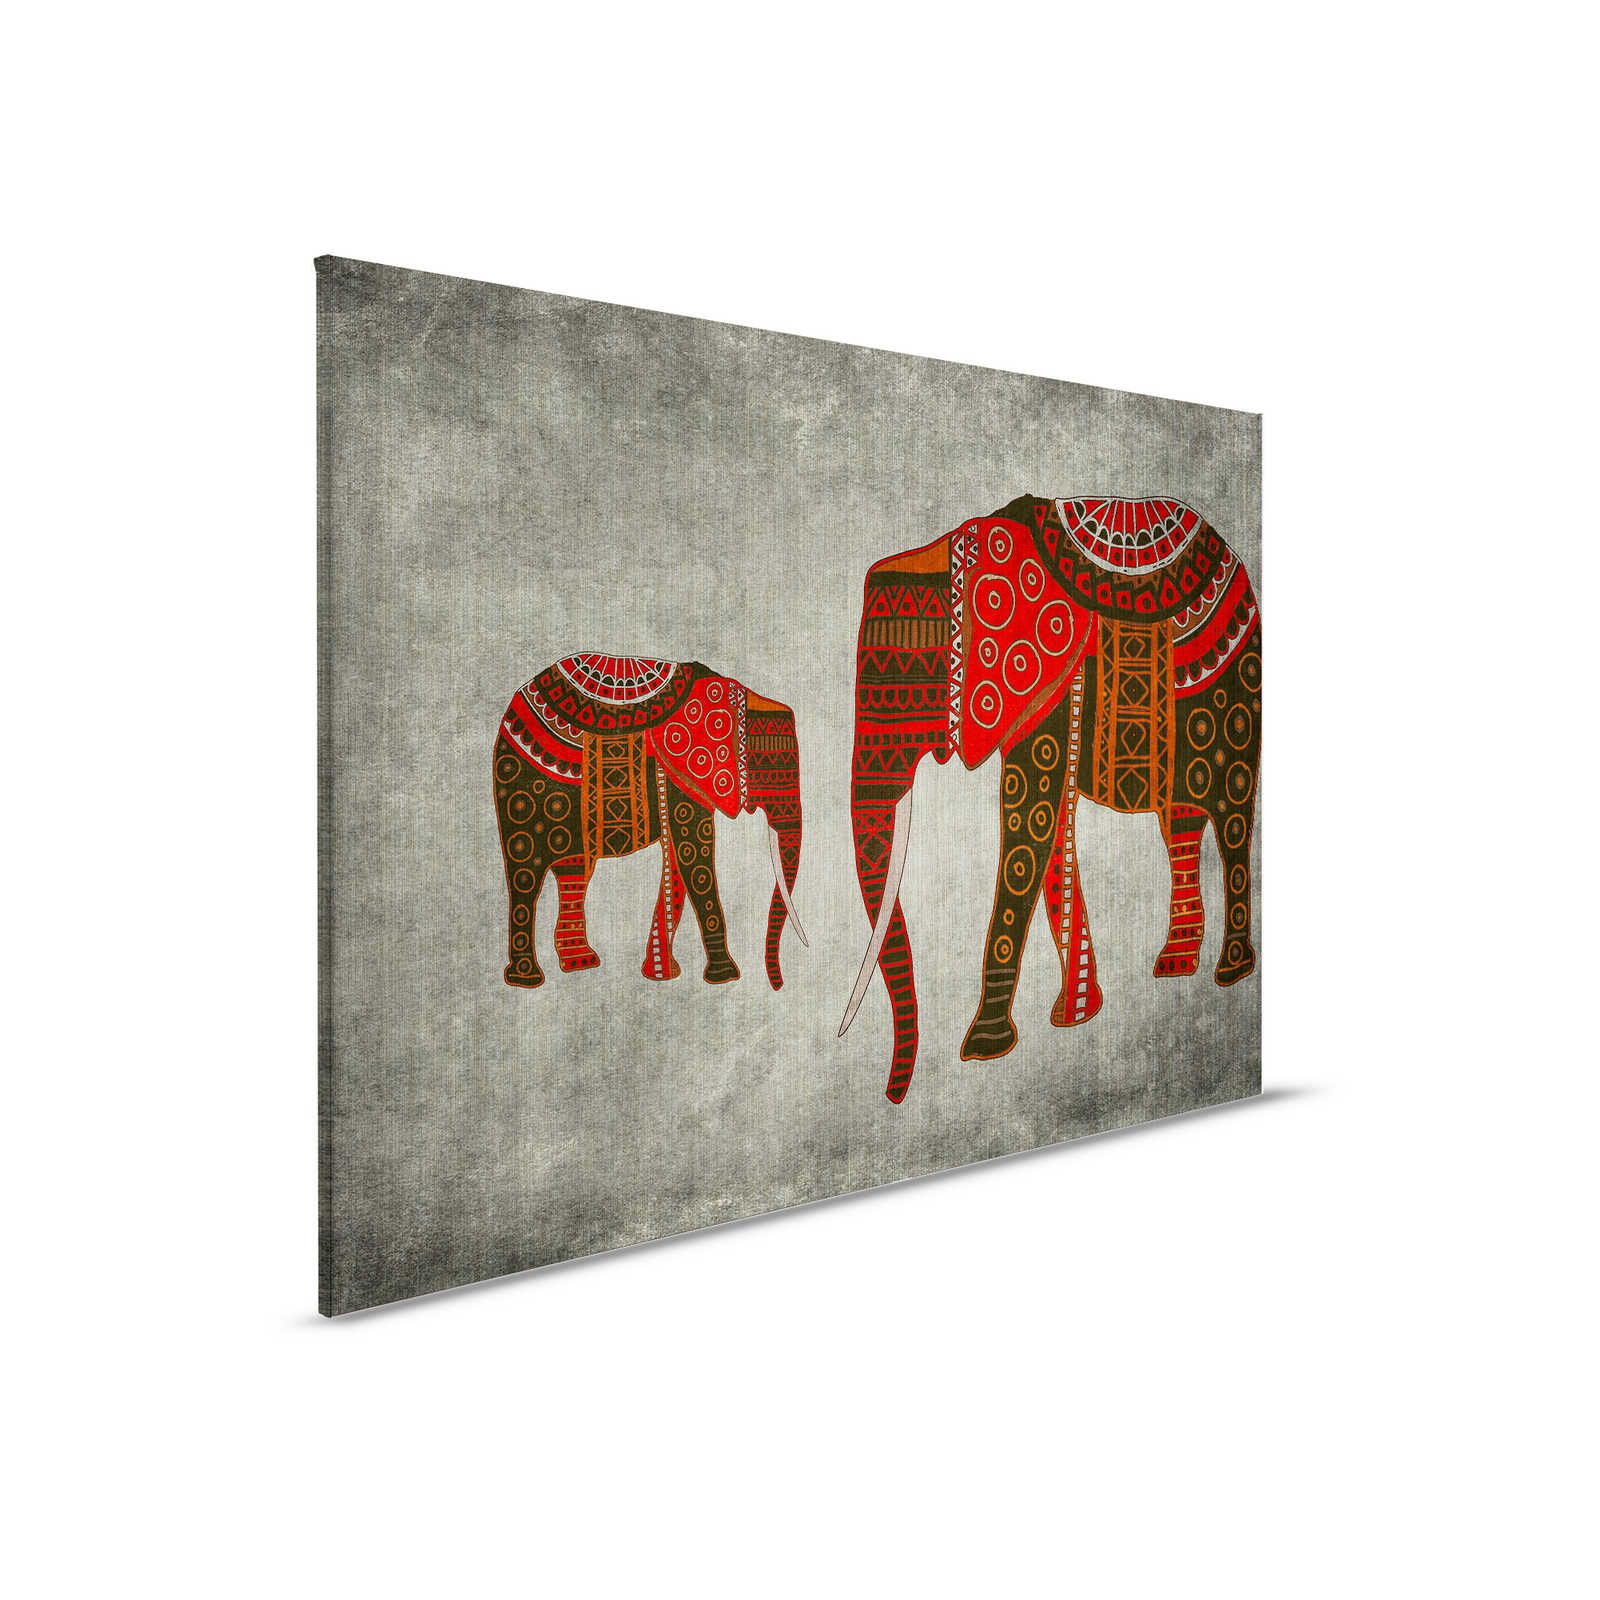         Nairobi 4 - Elephants canvas painting with ethnic patterns - 0.90 m x 0.60 m
    